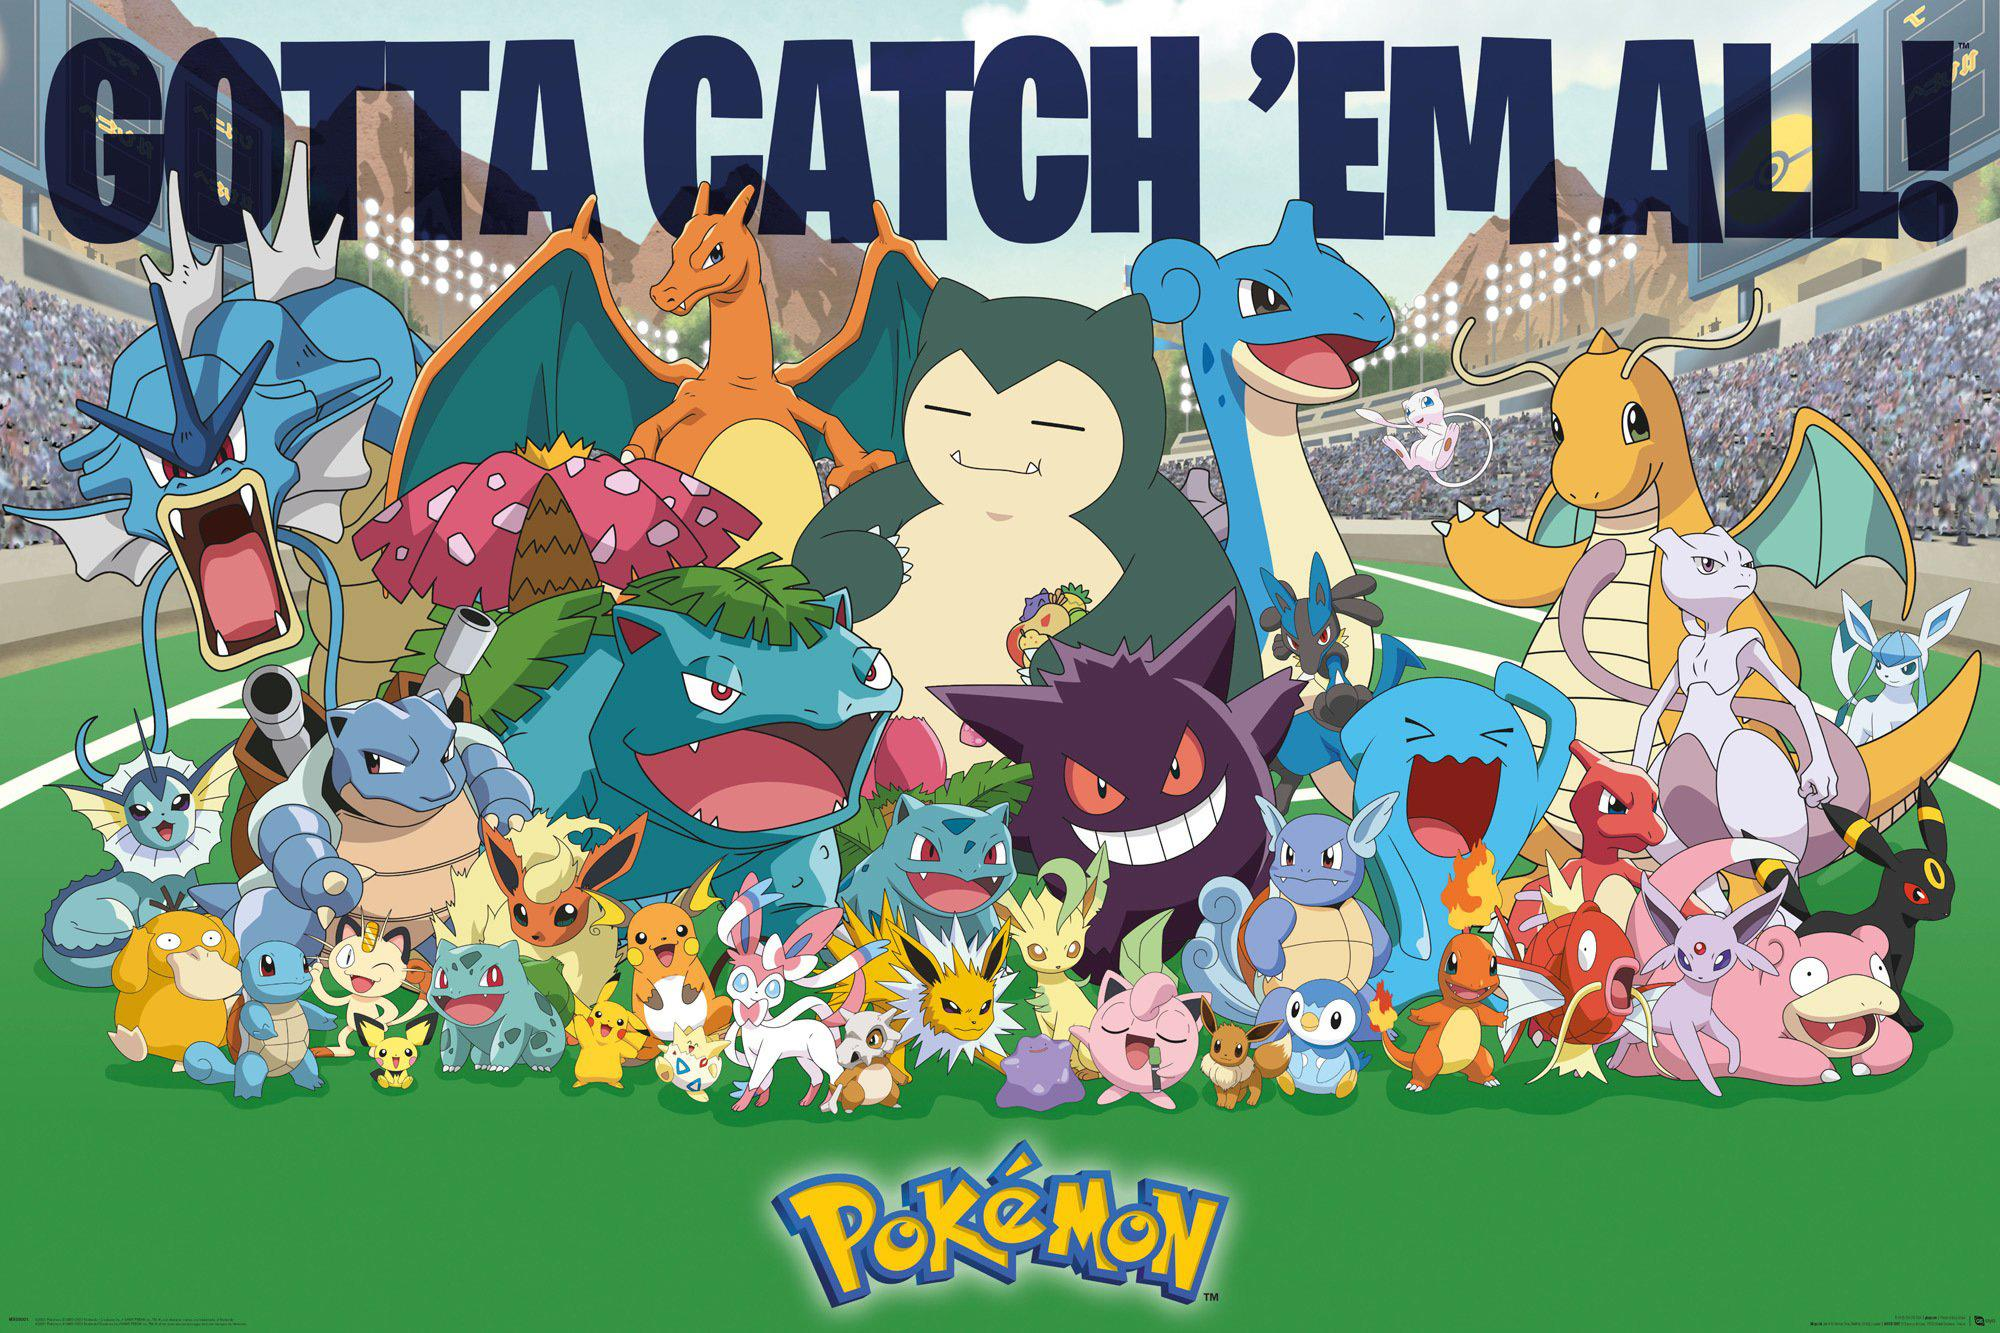 GB Pokémon EYE Favorites Poster \'em catch Gotta all!